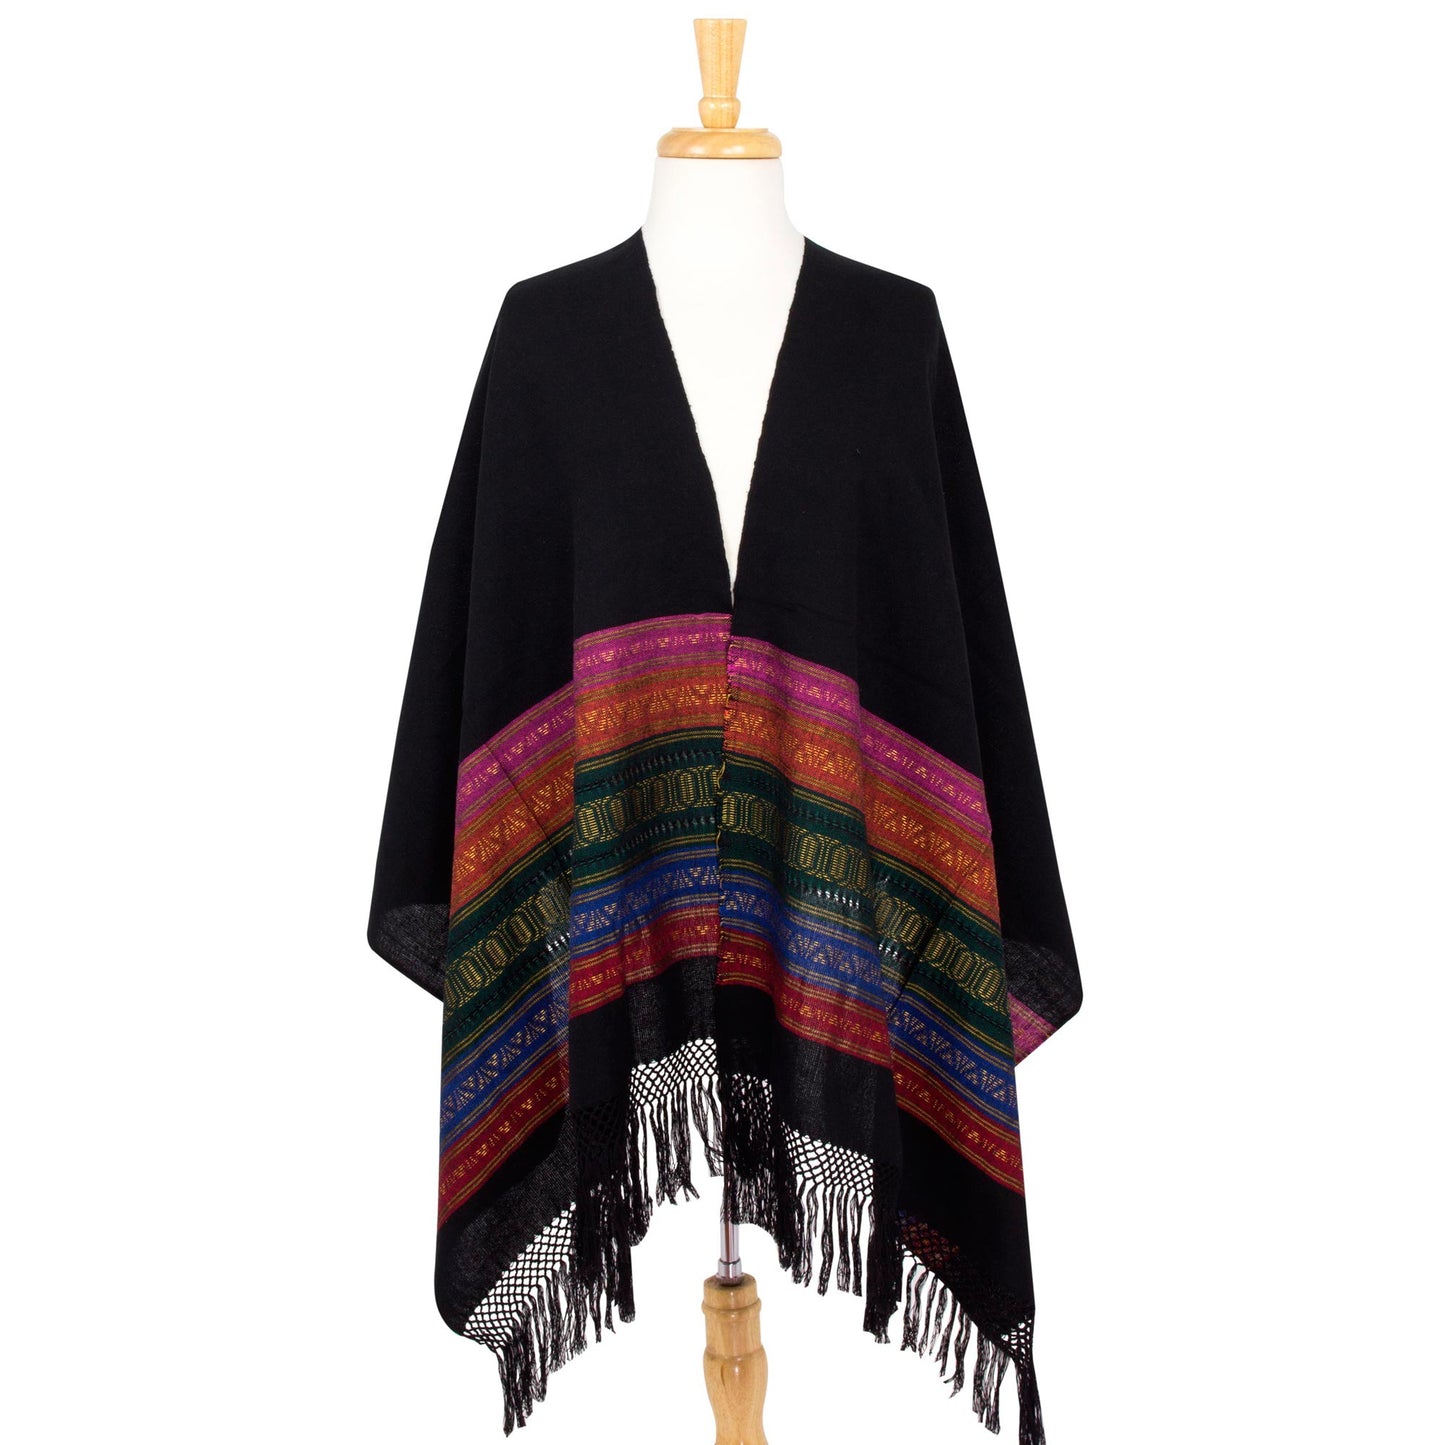 Zapotec Night Splendor Black Zapotec Rebozo Shawl with Colorful Geometric Stripes